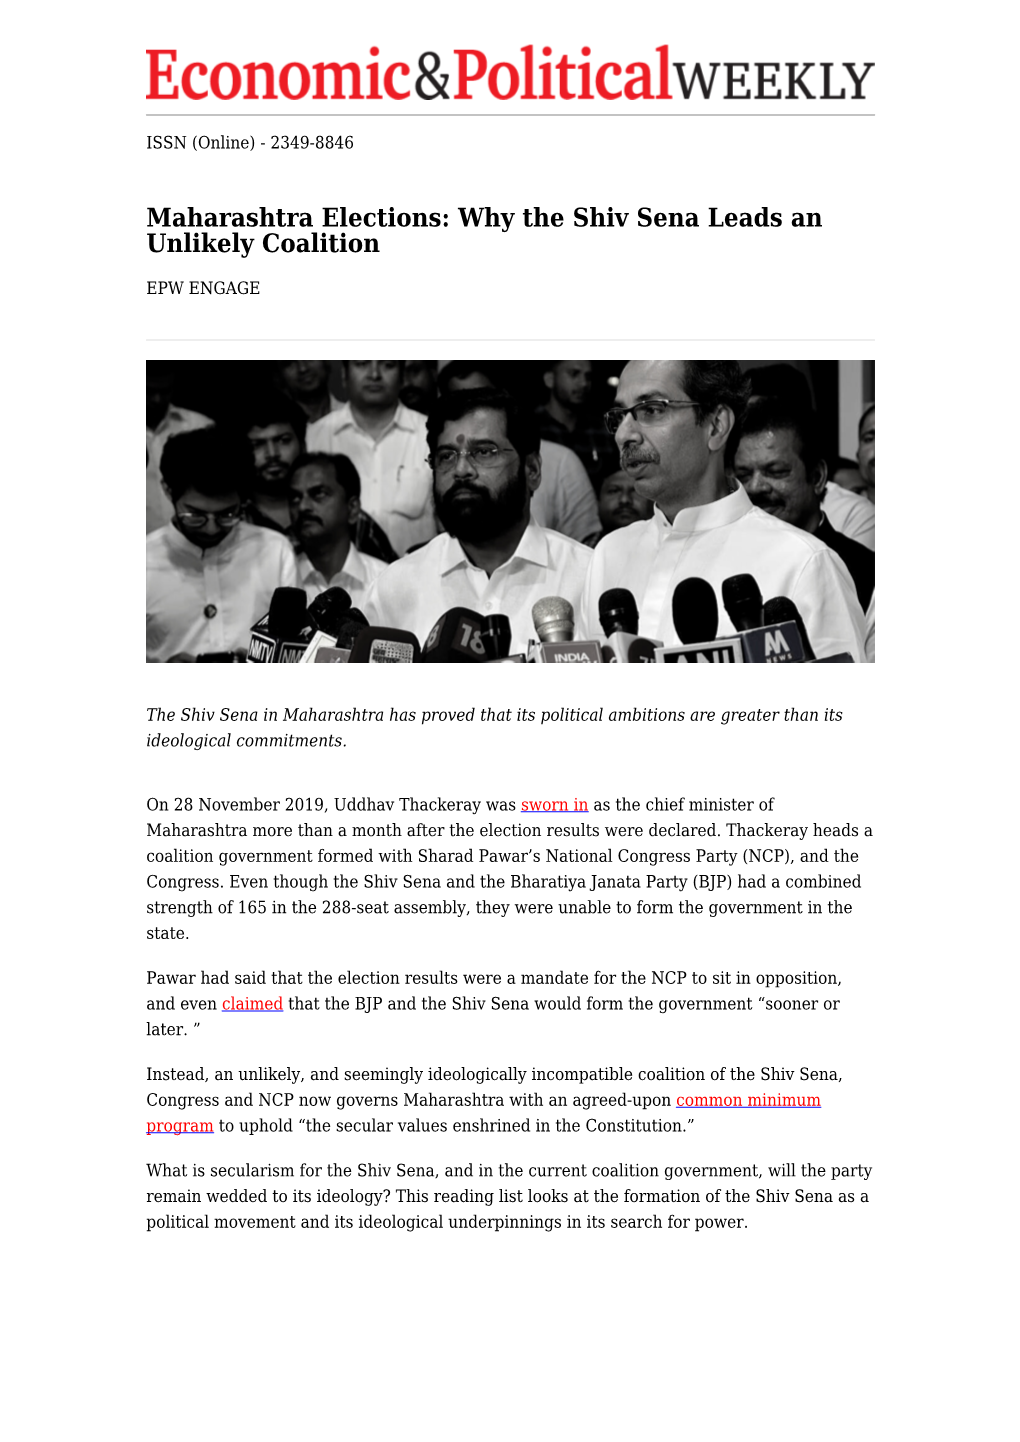 Maharashtra Elections: Why the Shiv Sena Leads an Unlikely Coalition